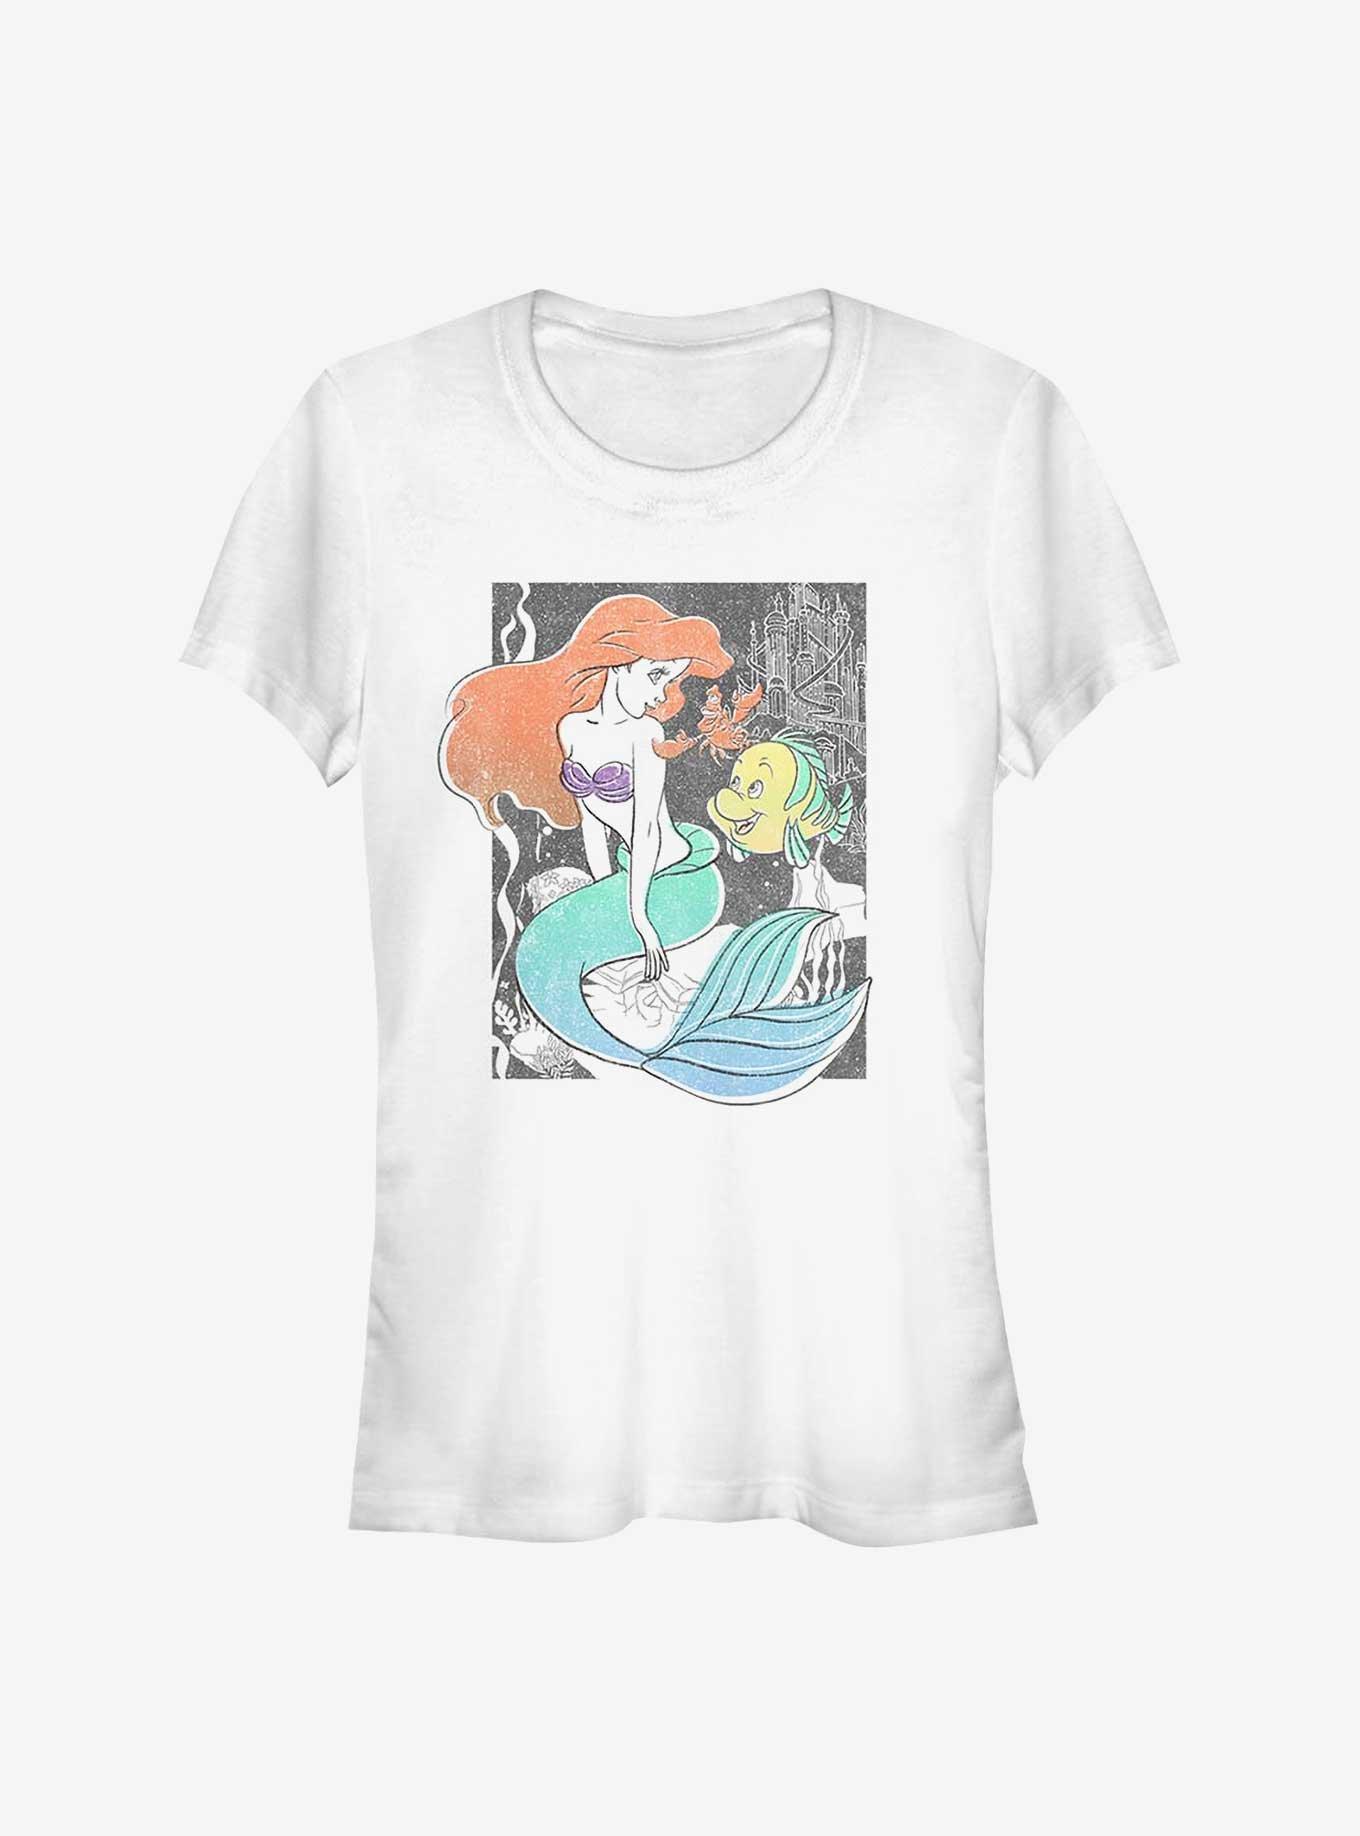 Disney The Little Mermaid Ariel and Flounder Poster Girls T-Shirt